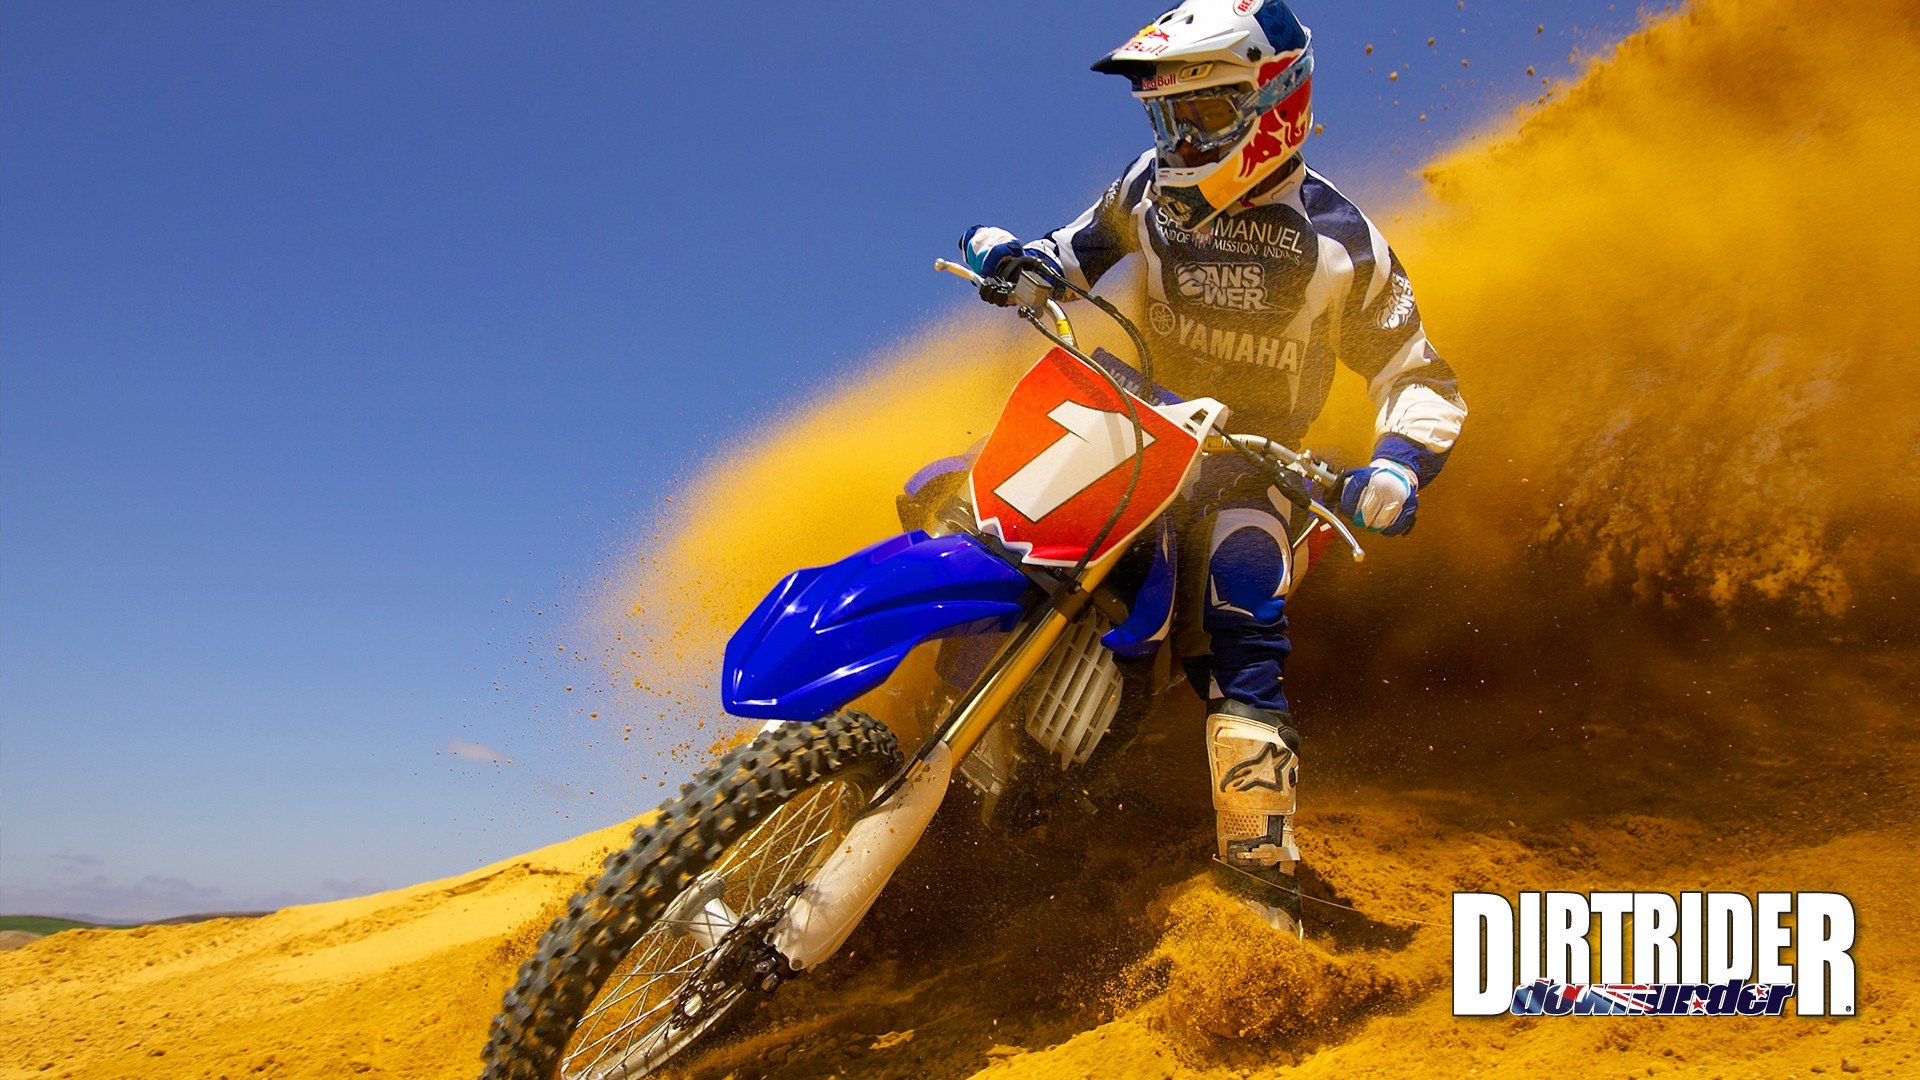 Download full hd 1920x1080 Motocross (Dirt Bike) desktop background ID:378371 for free